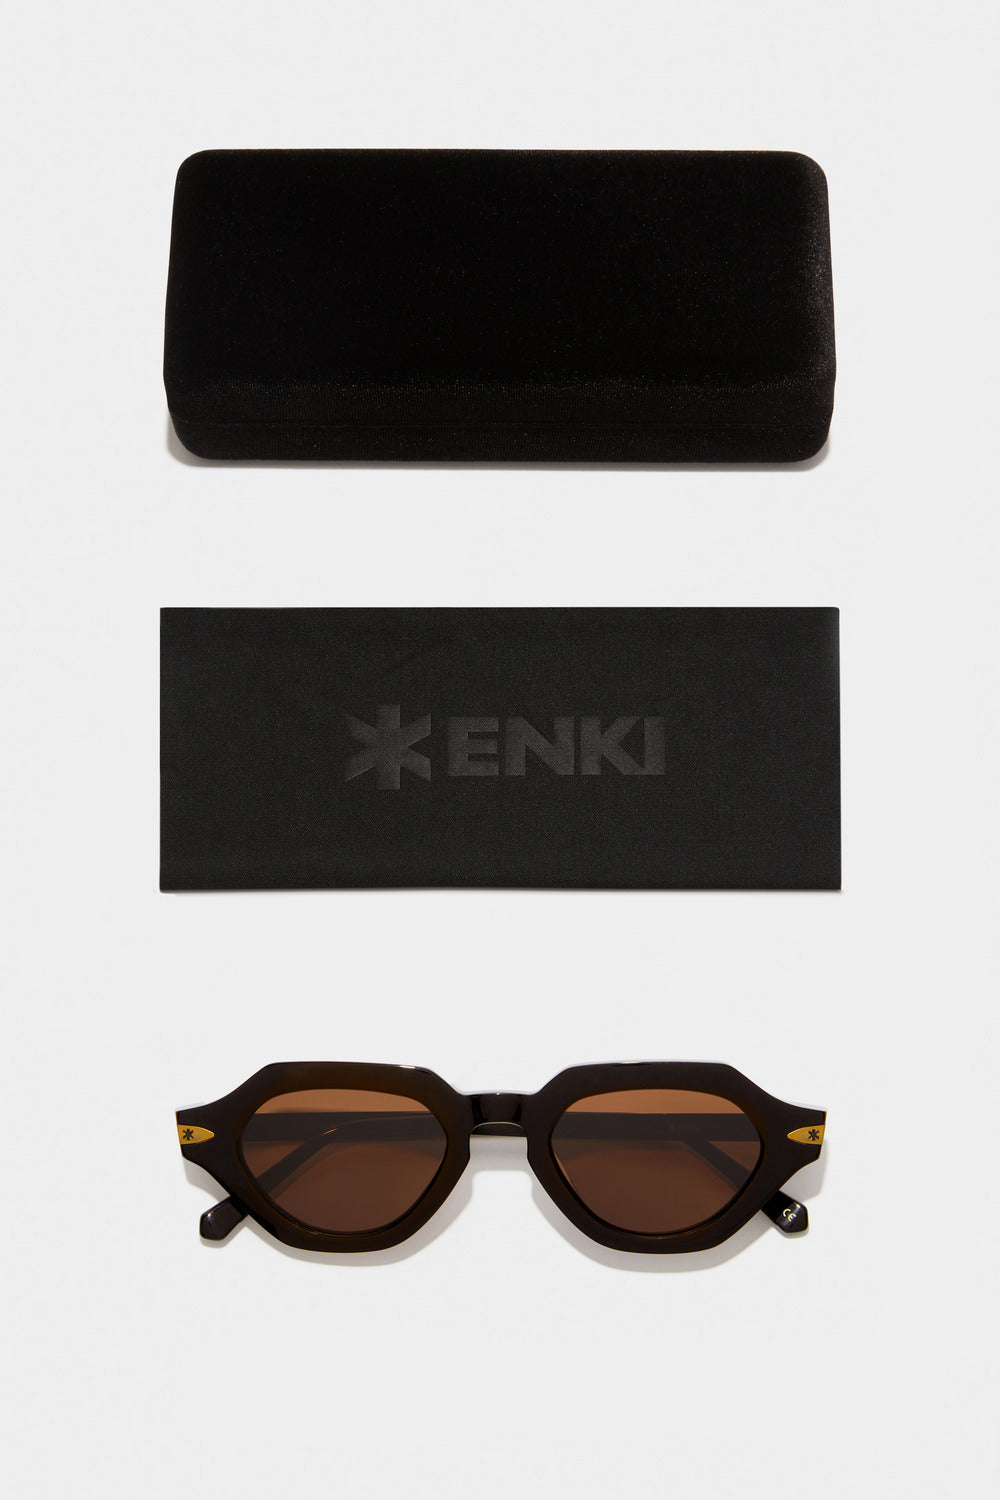 www.enkieyewear.com Hippias Men’s and Women’s Sunglasses